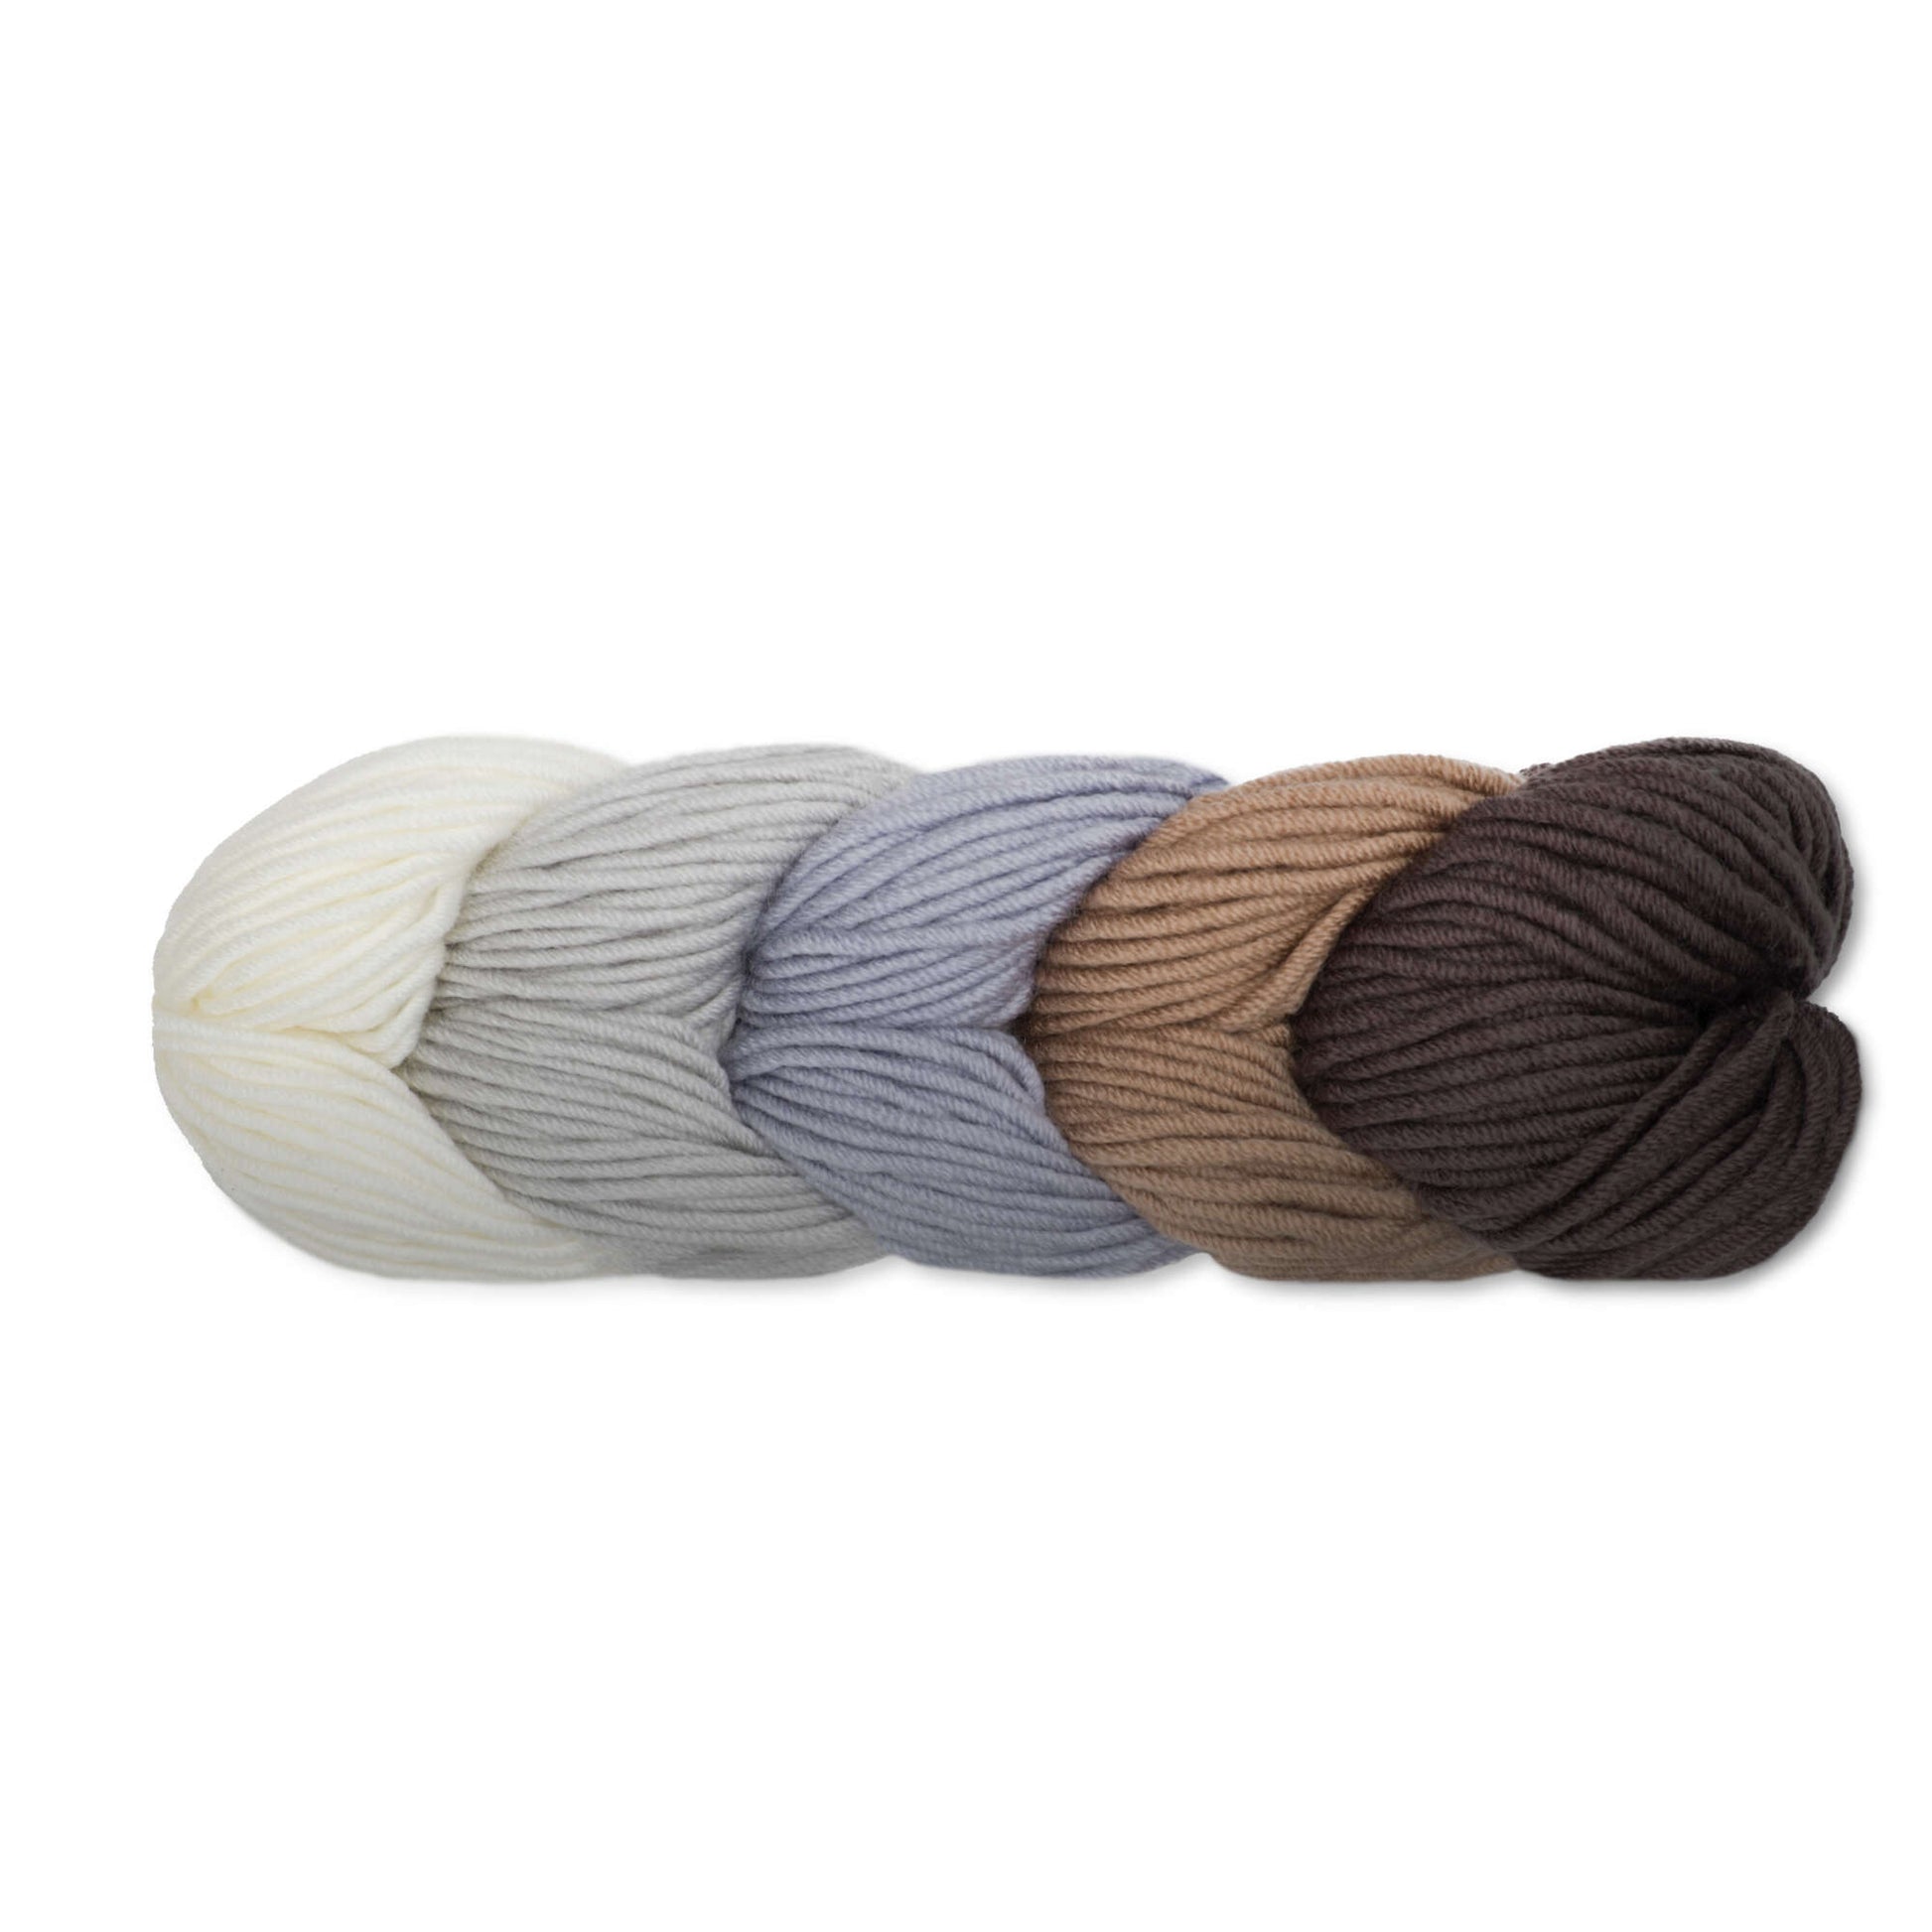 Caron x Pantone Yarn - Discontinued Shades Provincial Lilac